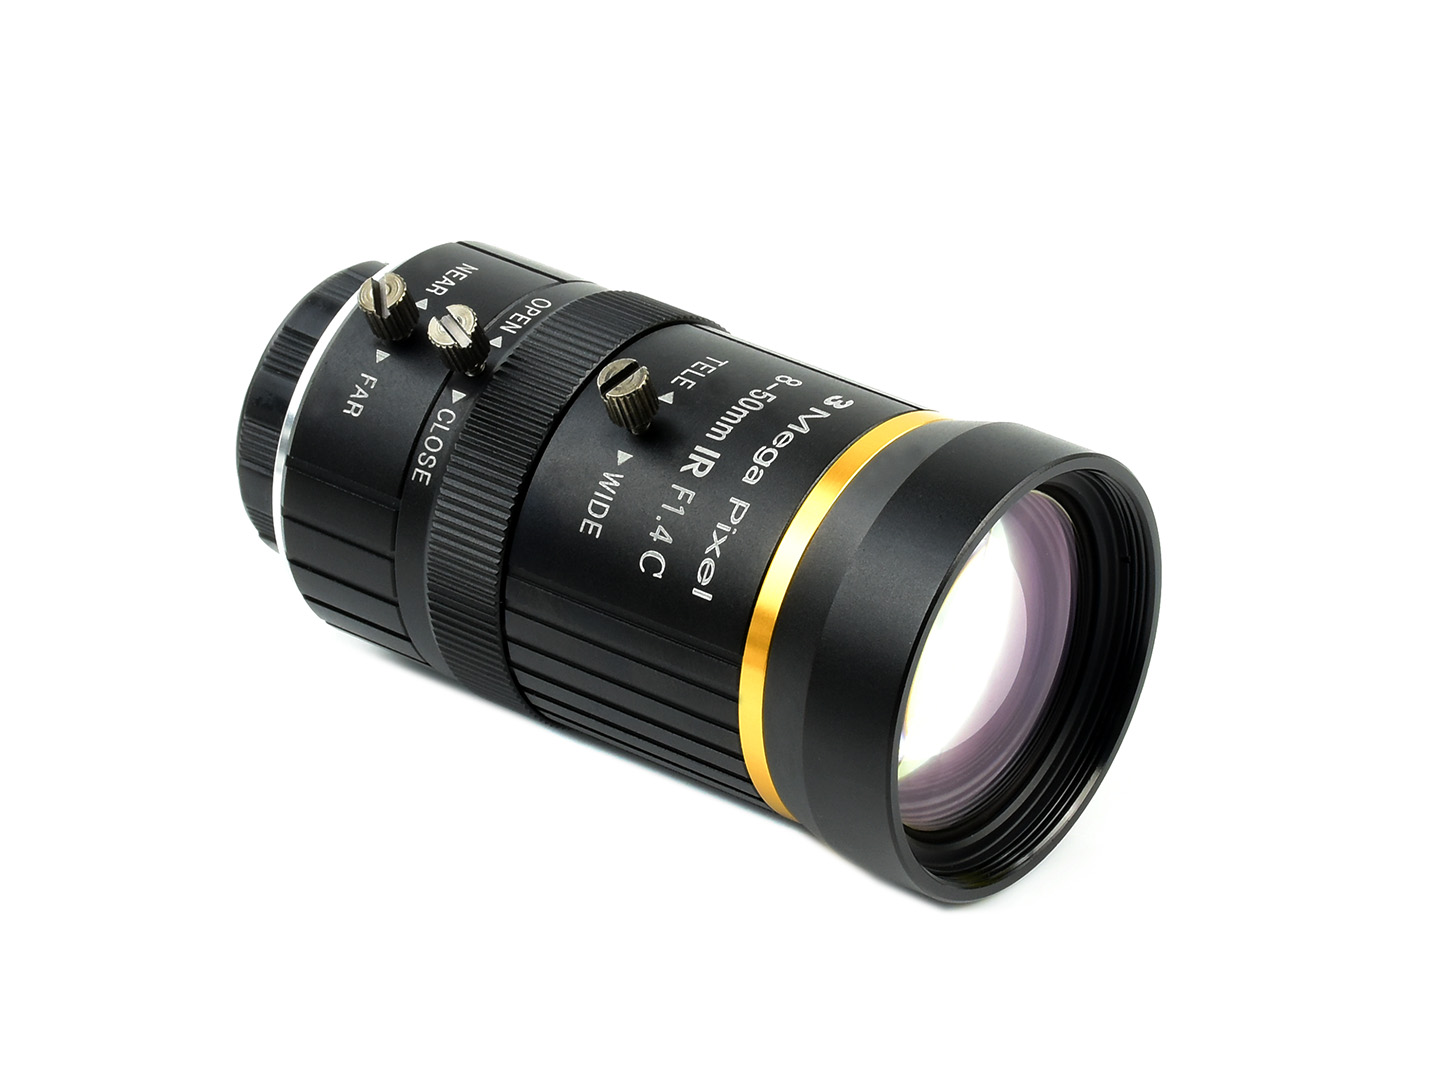 Quality Industrial Zoom Lens, 8-50mm Adjustable Focal Length